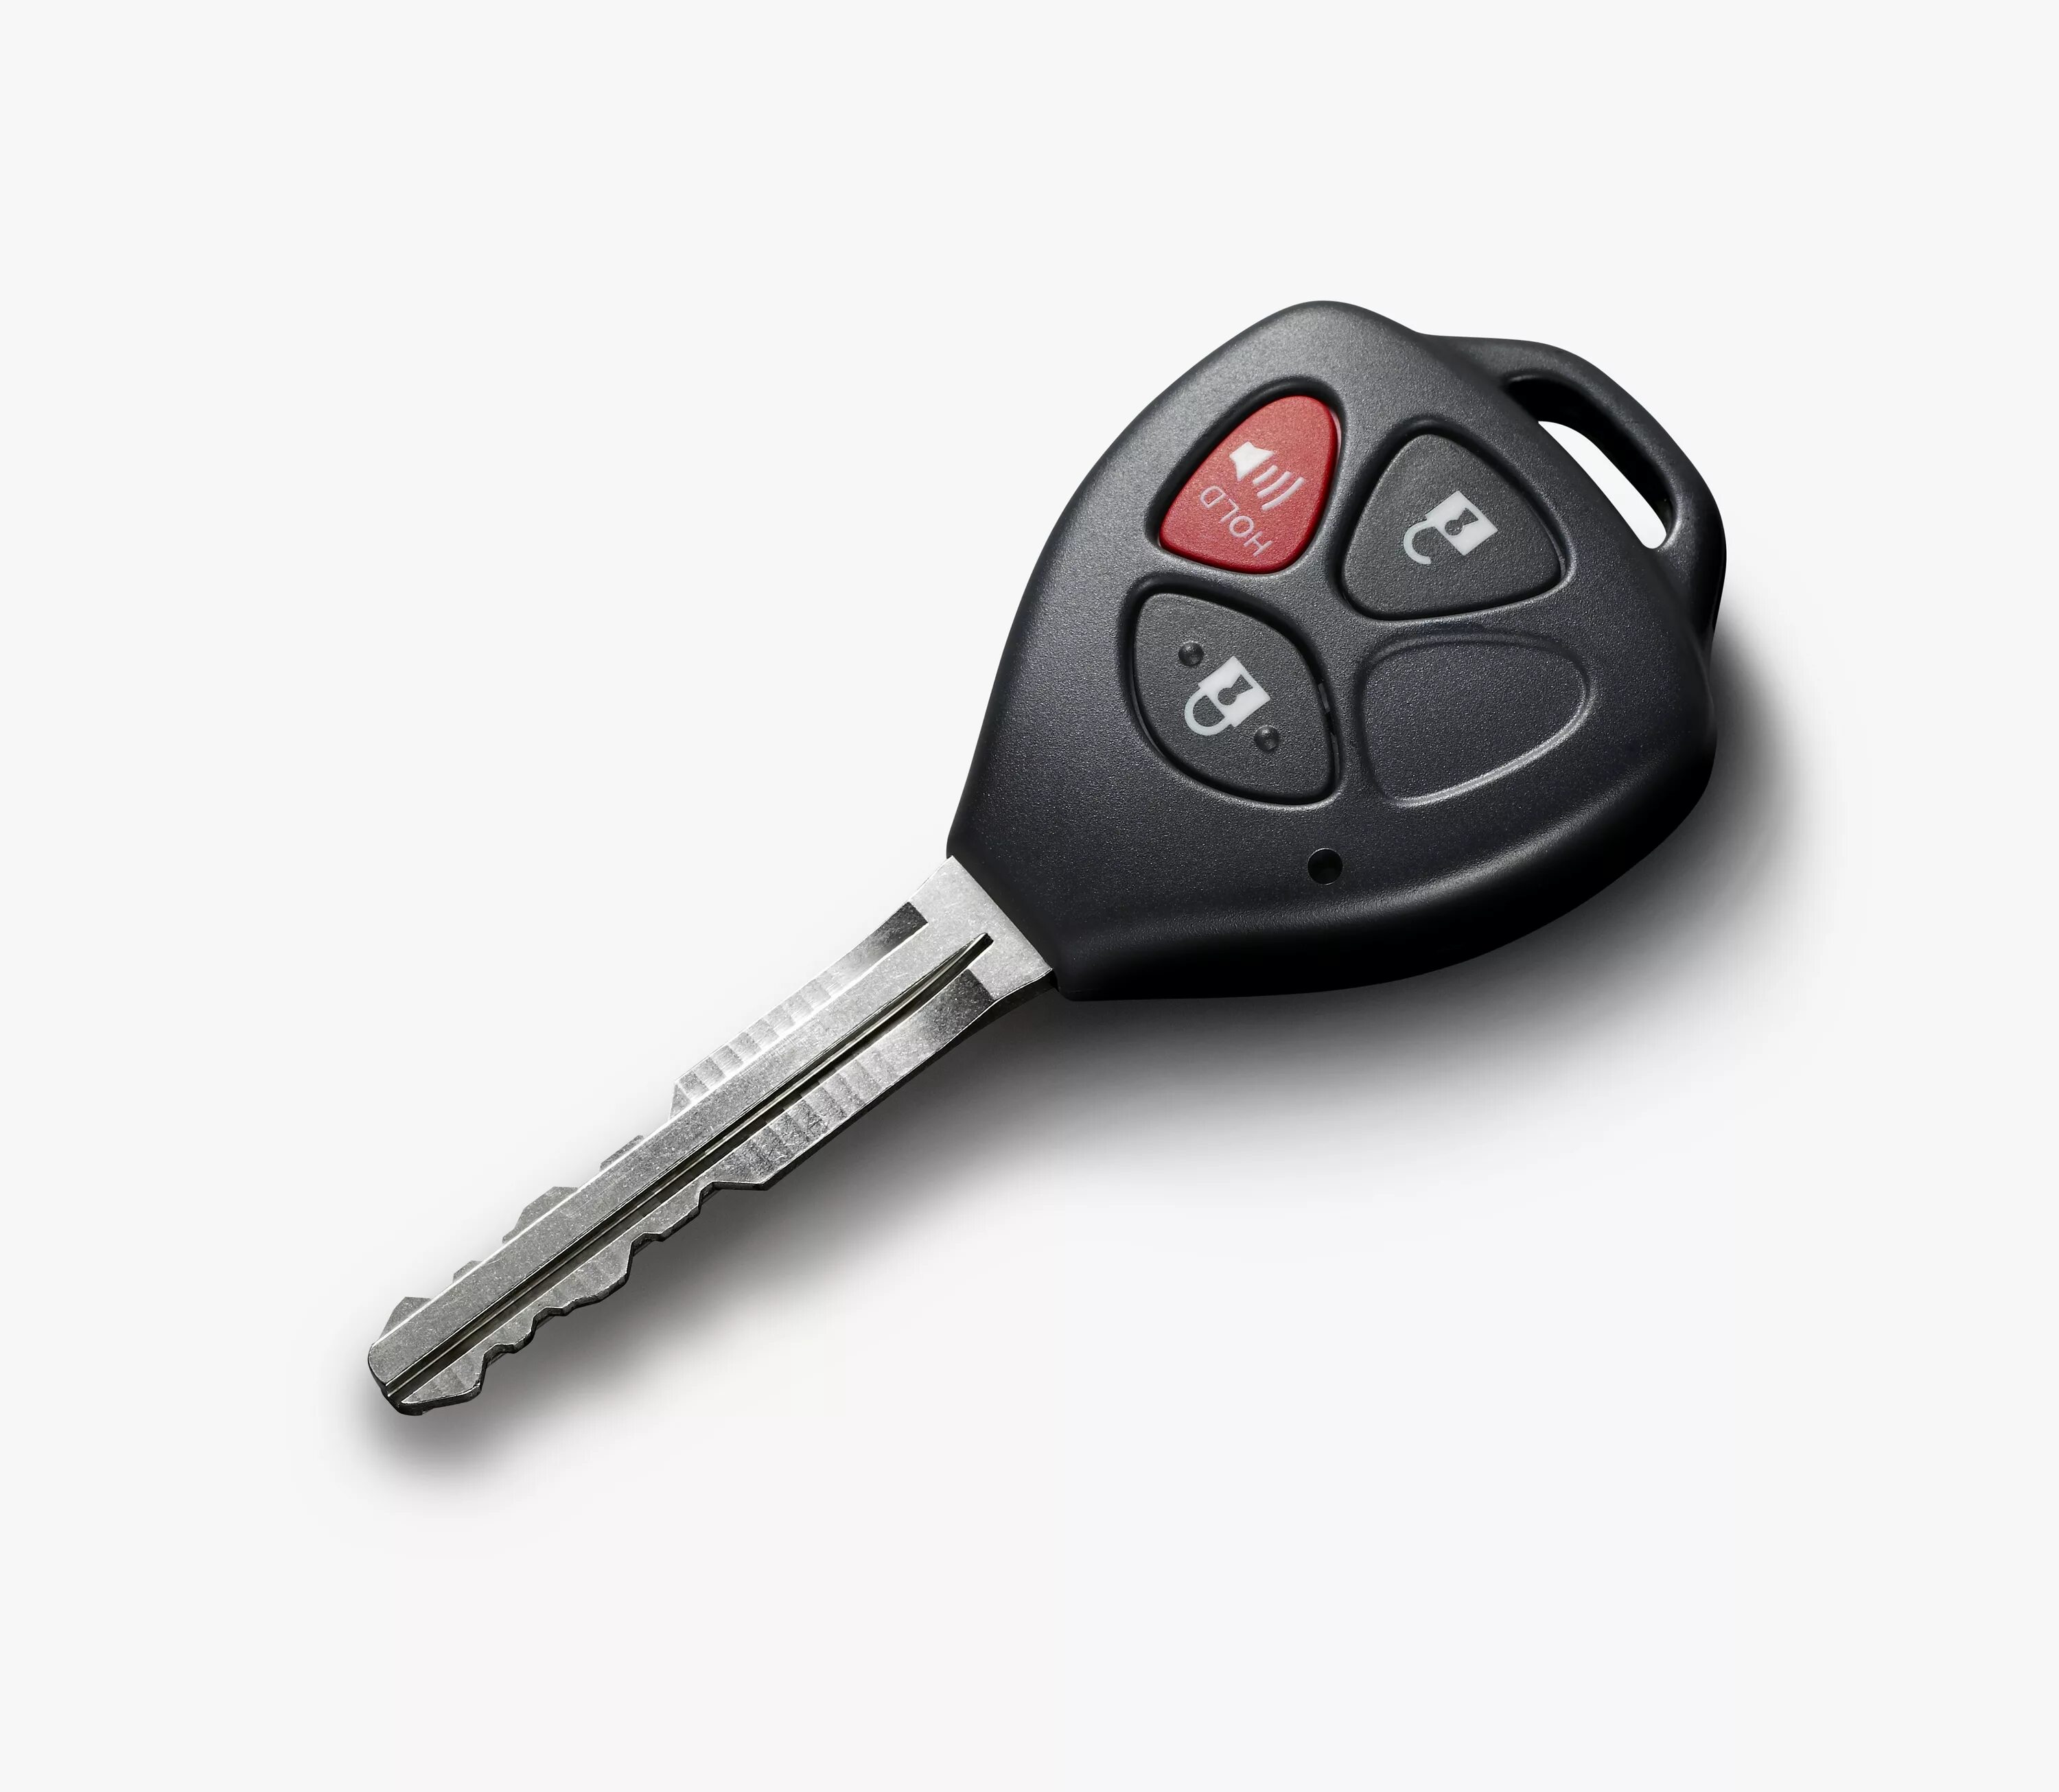 Вол ключ. Ключ автомобильный. Ключи от машины. Ключи зажигания для автомобилей. Ключи от Тачки.